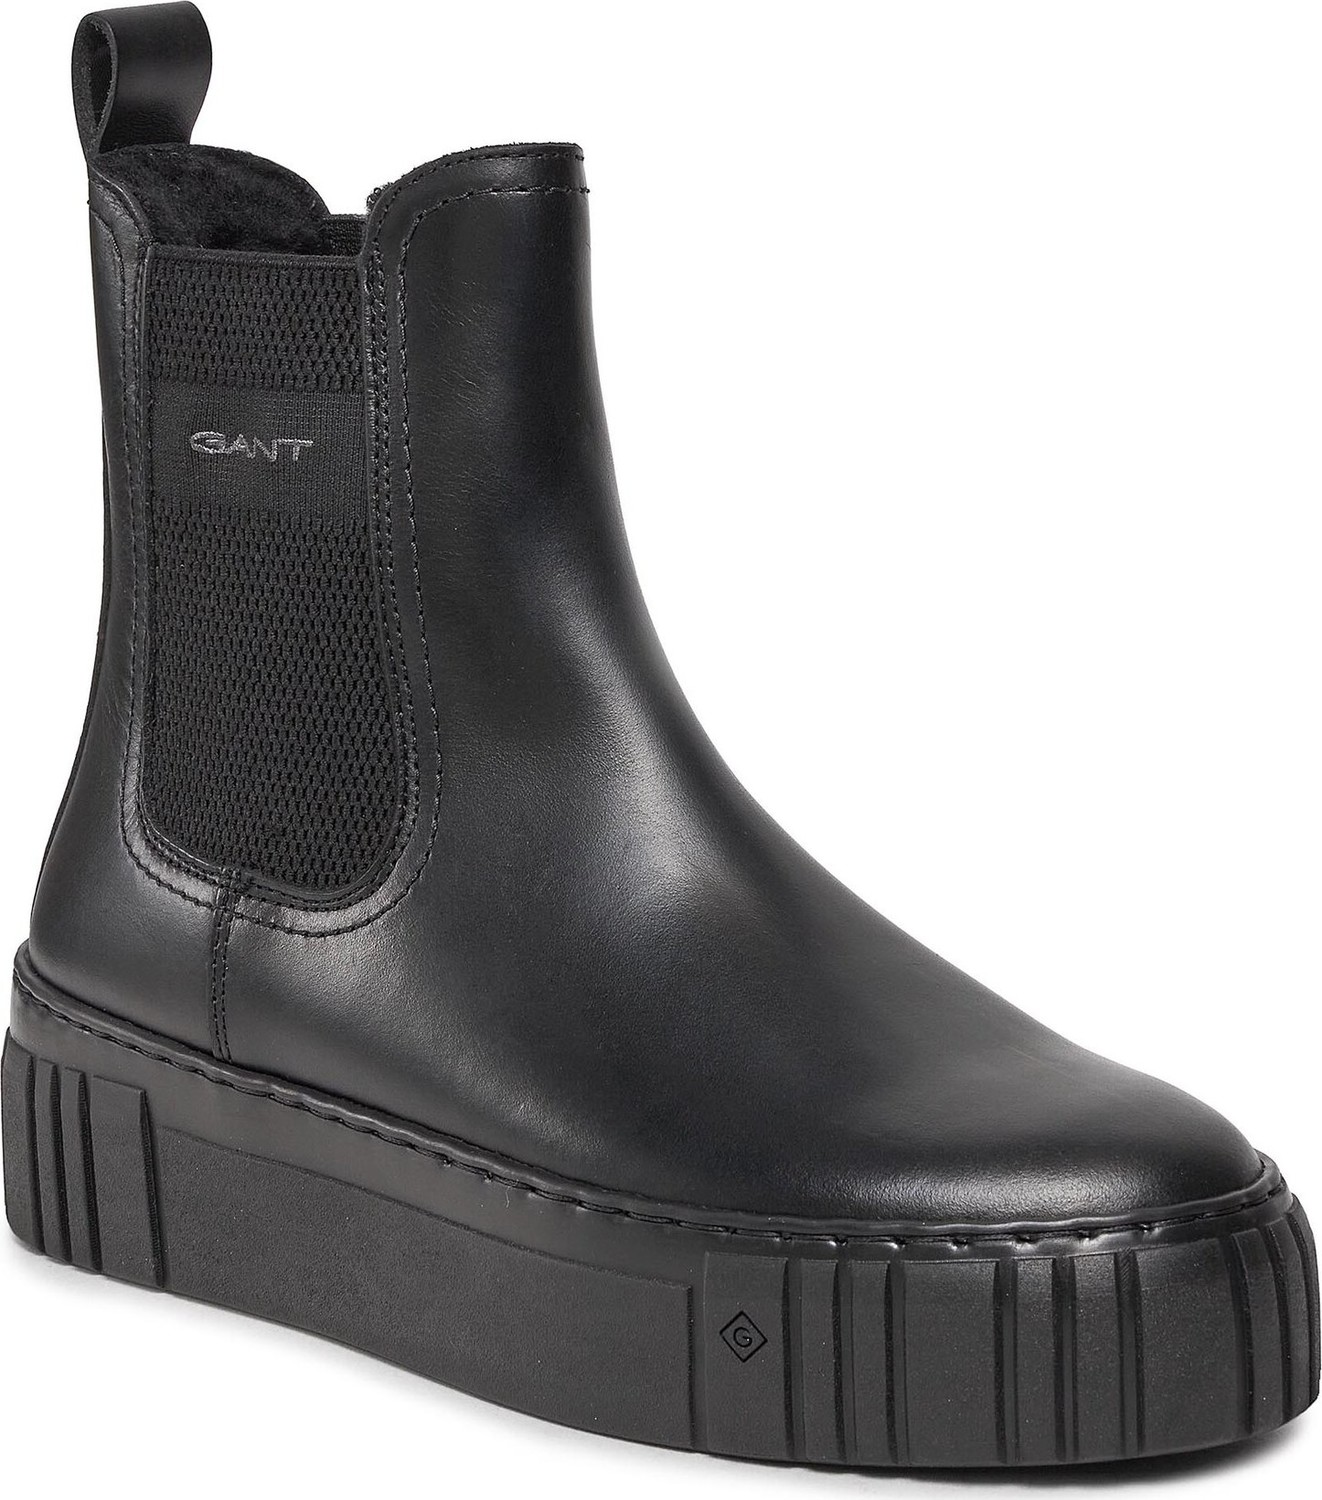 Kotníková obuv s elastickým prvkem Gant Snowmonth Chelsea Boot 27551372 Black